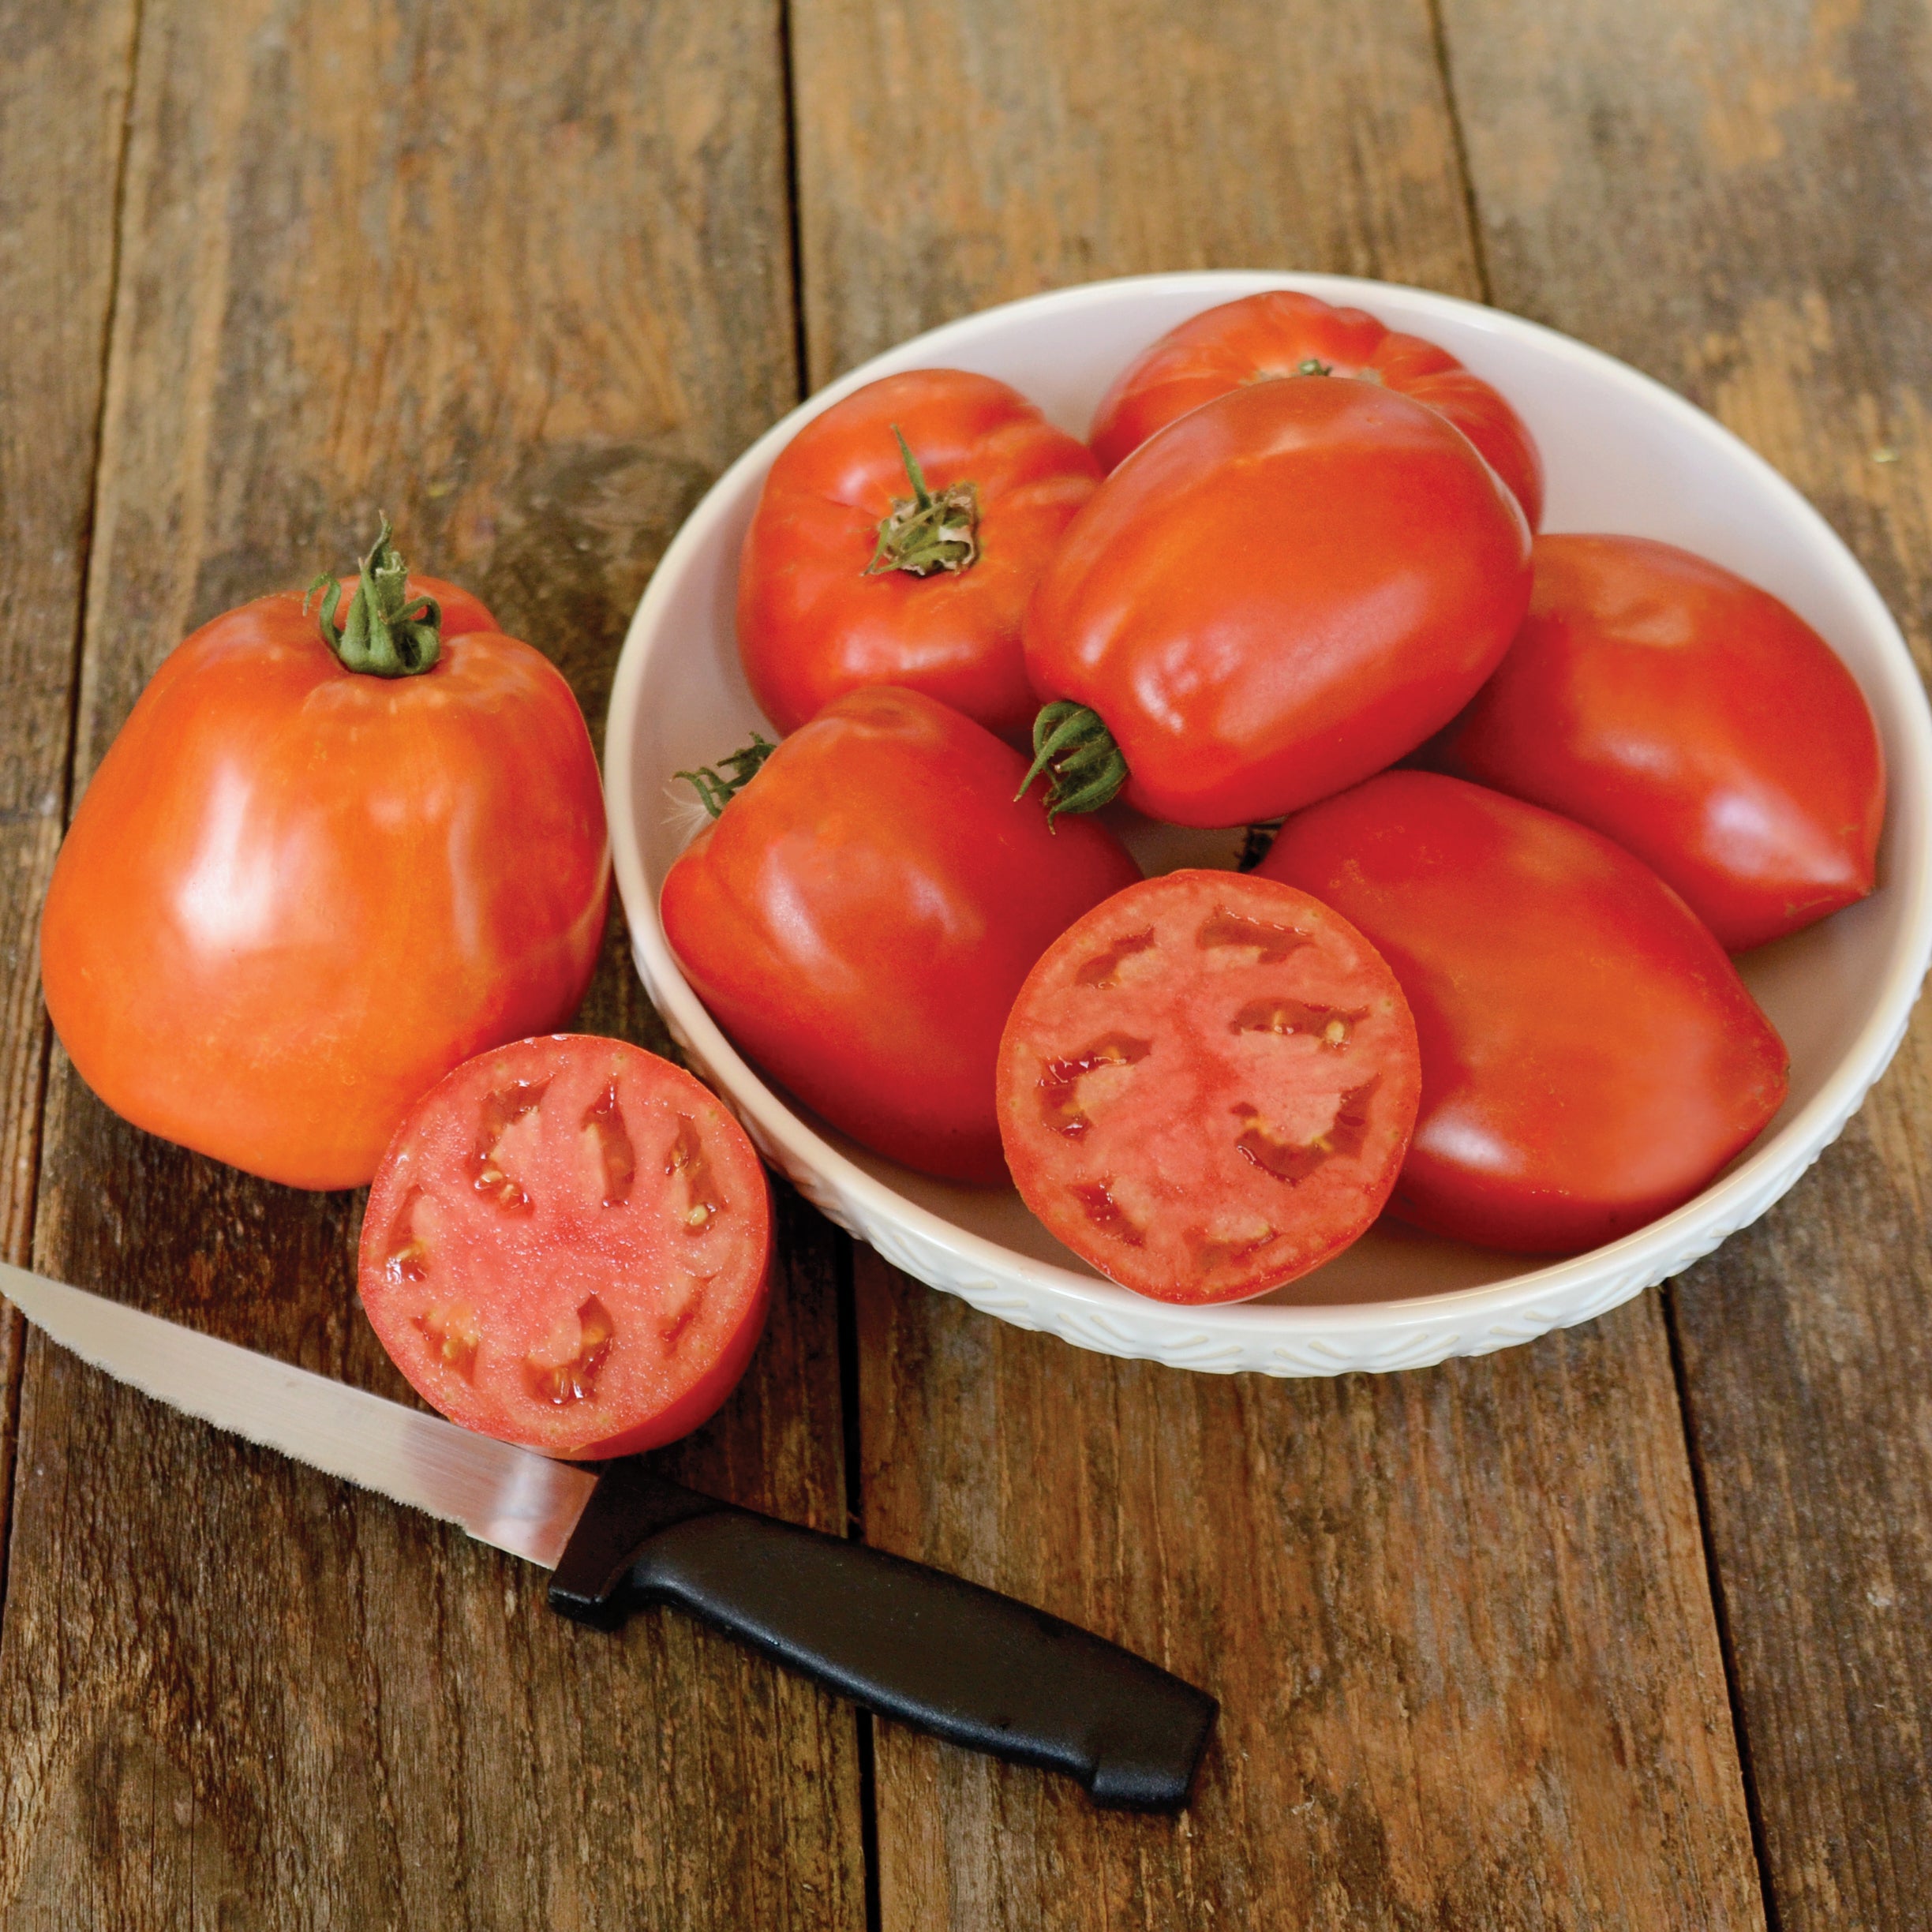 Jet Star Tomato Plant